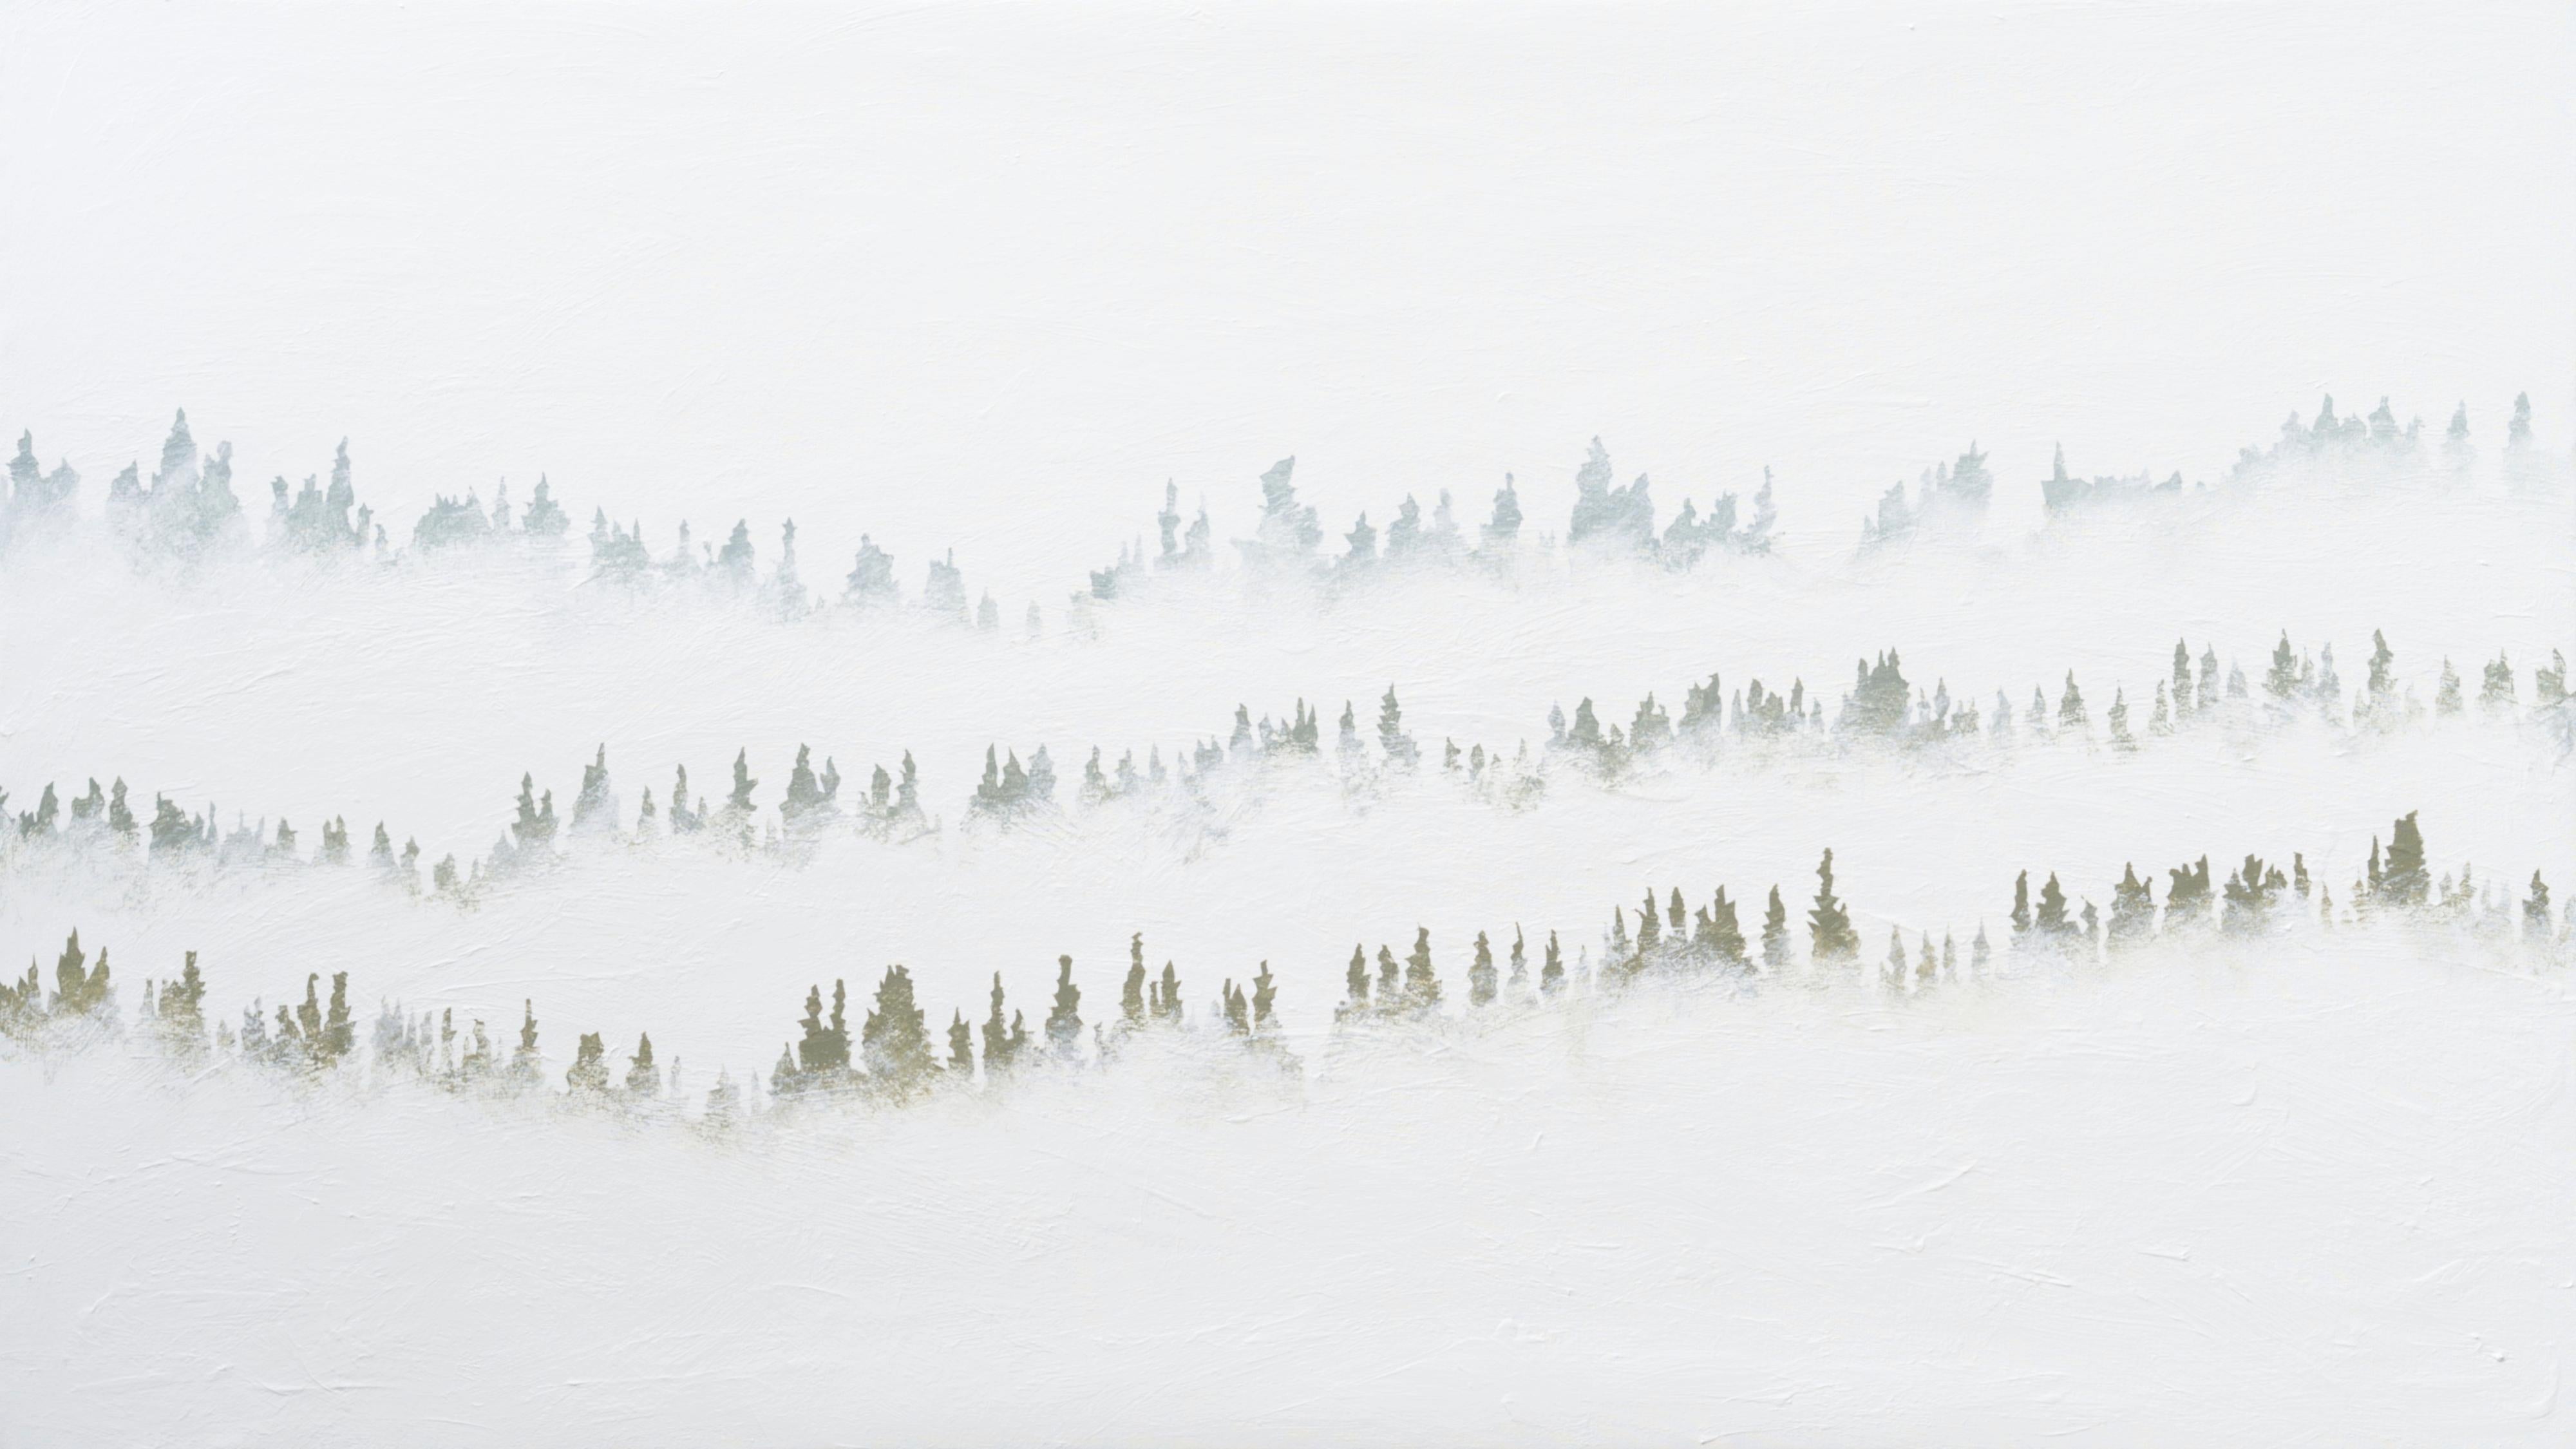 Figurative Painting Robert Motelski - Mountains 22 janvier 12:31 - Peinture de paysage expressionniste moderne minimaliste